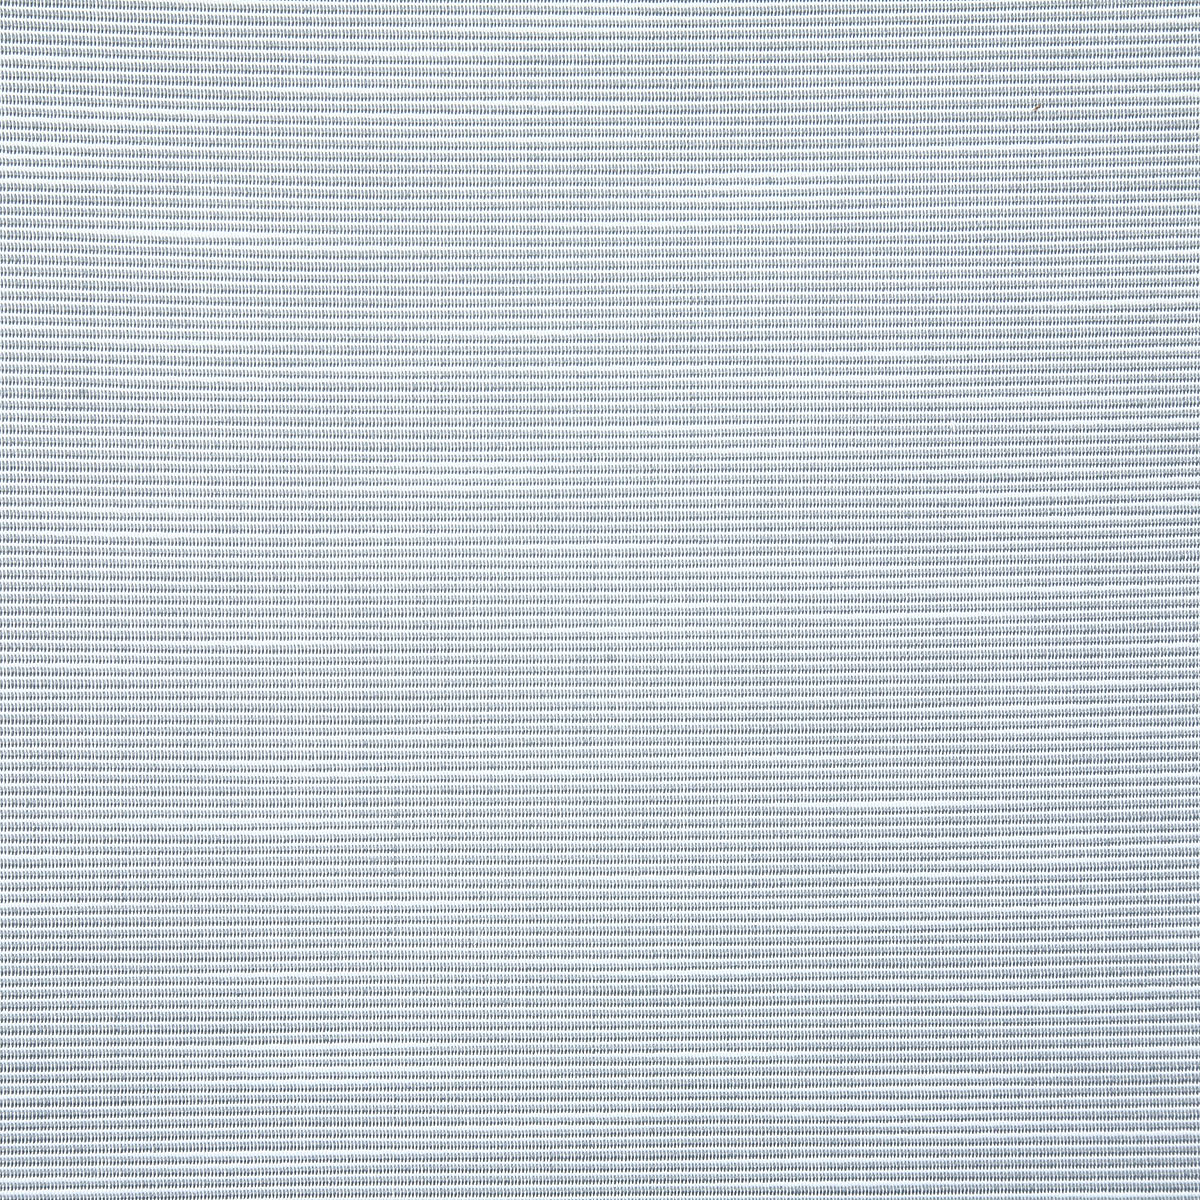 grey pattern fabric swatch